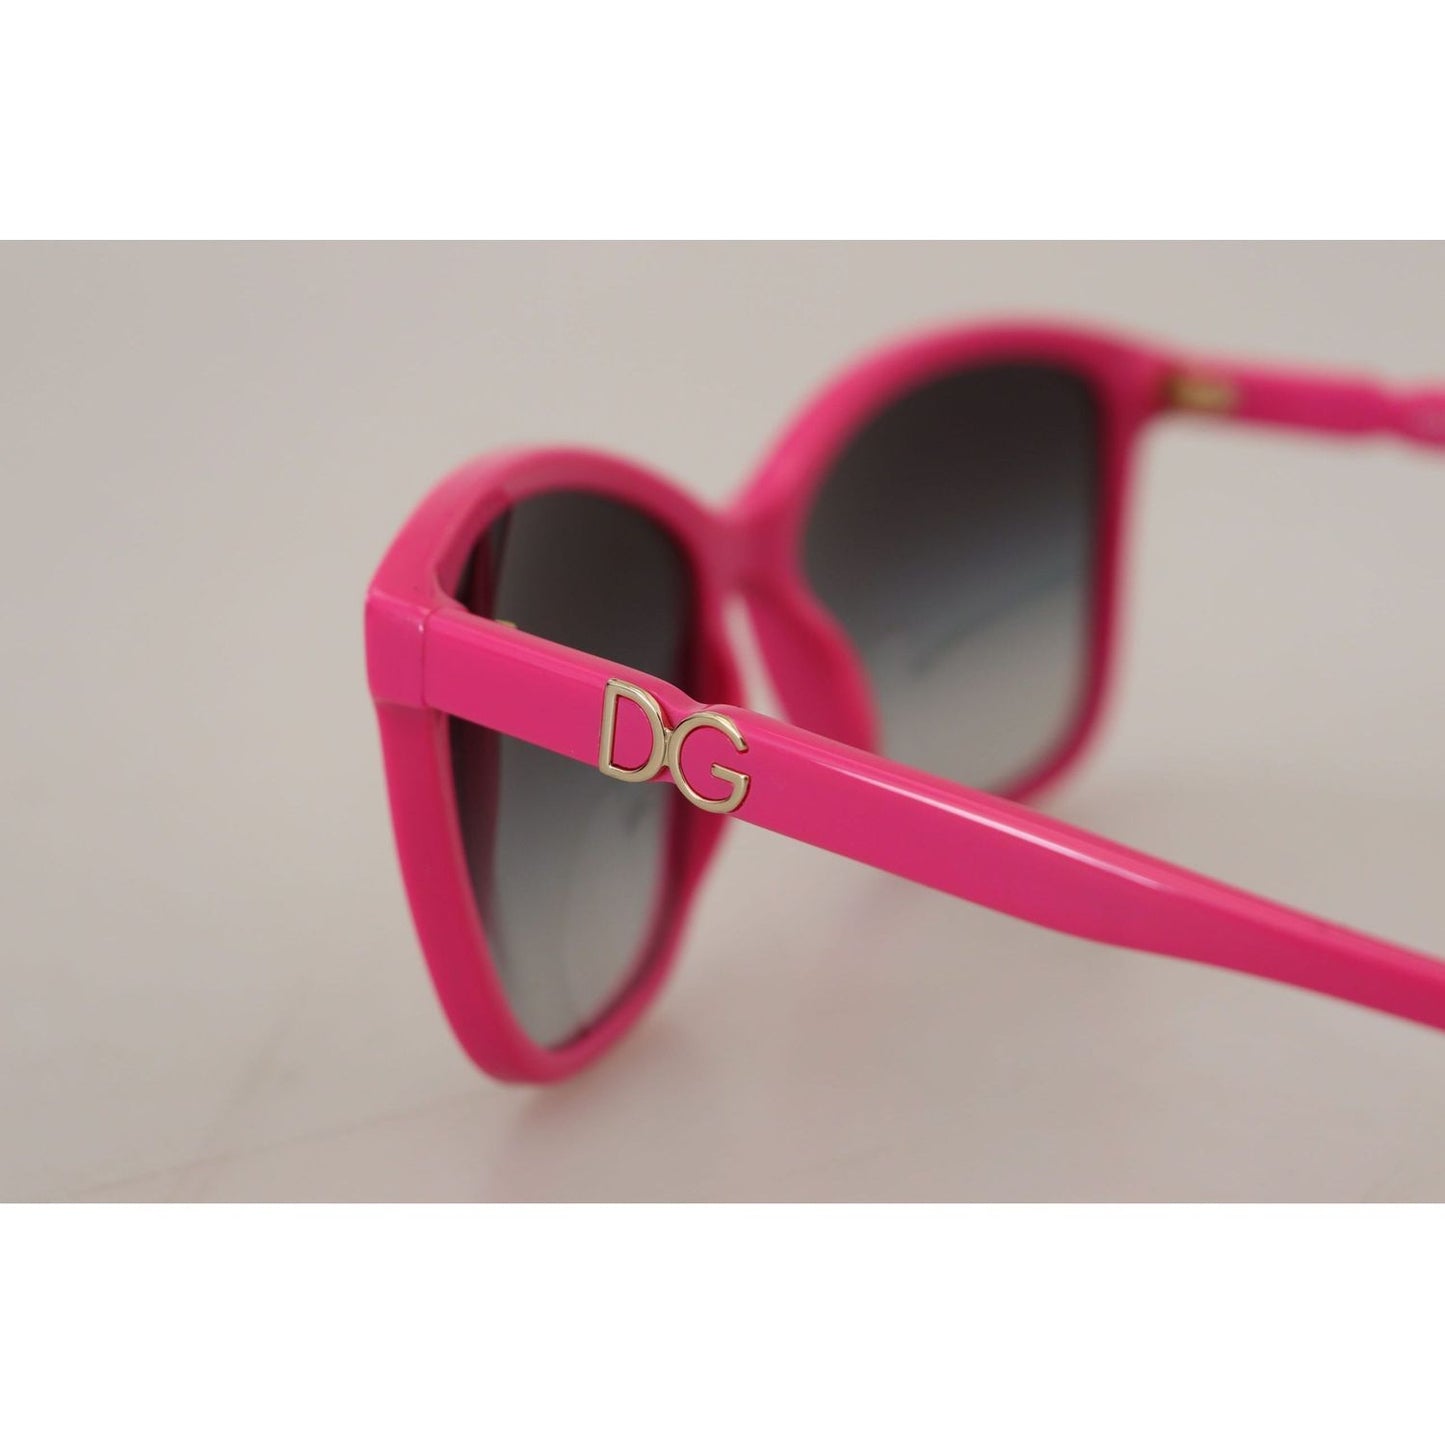 Dolce & Gabbana Elegant Pink Round Sunglasses for Women pink-acetate-frame-round-shades-dg4170m-women-sunglasses IMG_4608-scaled-8c7207ba-309.jpg